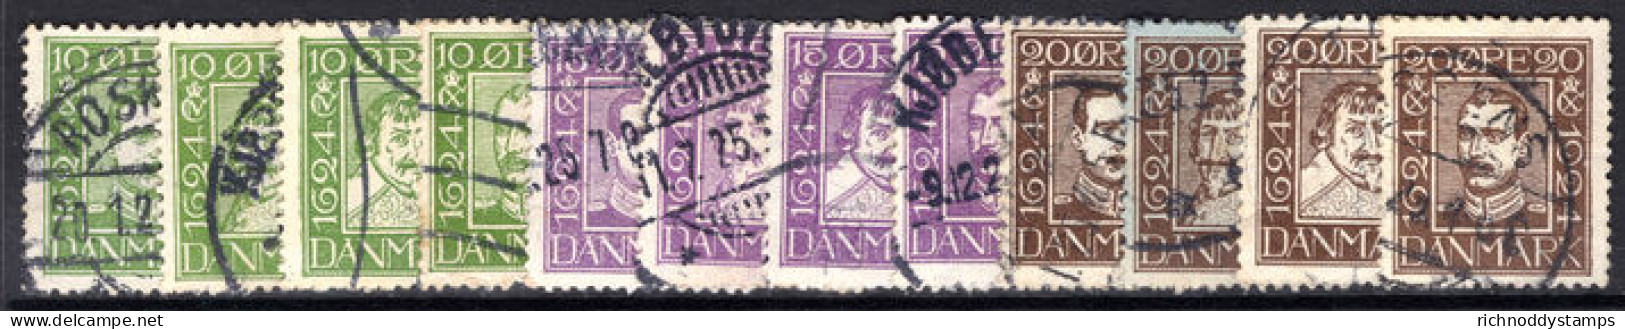 Denmark 1924 Danish Post Set Fine Used. - Used Stamps